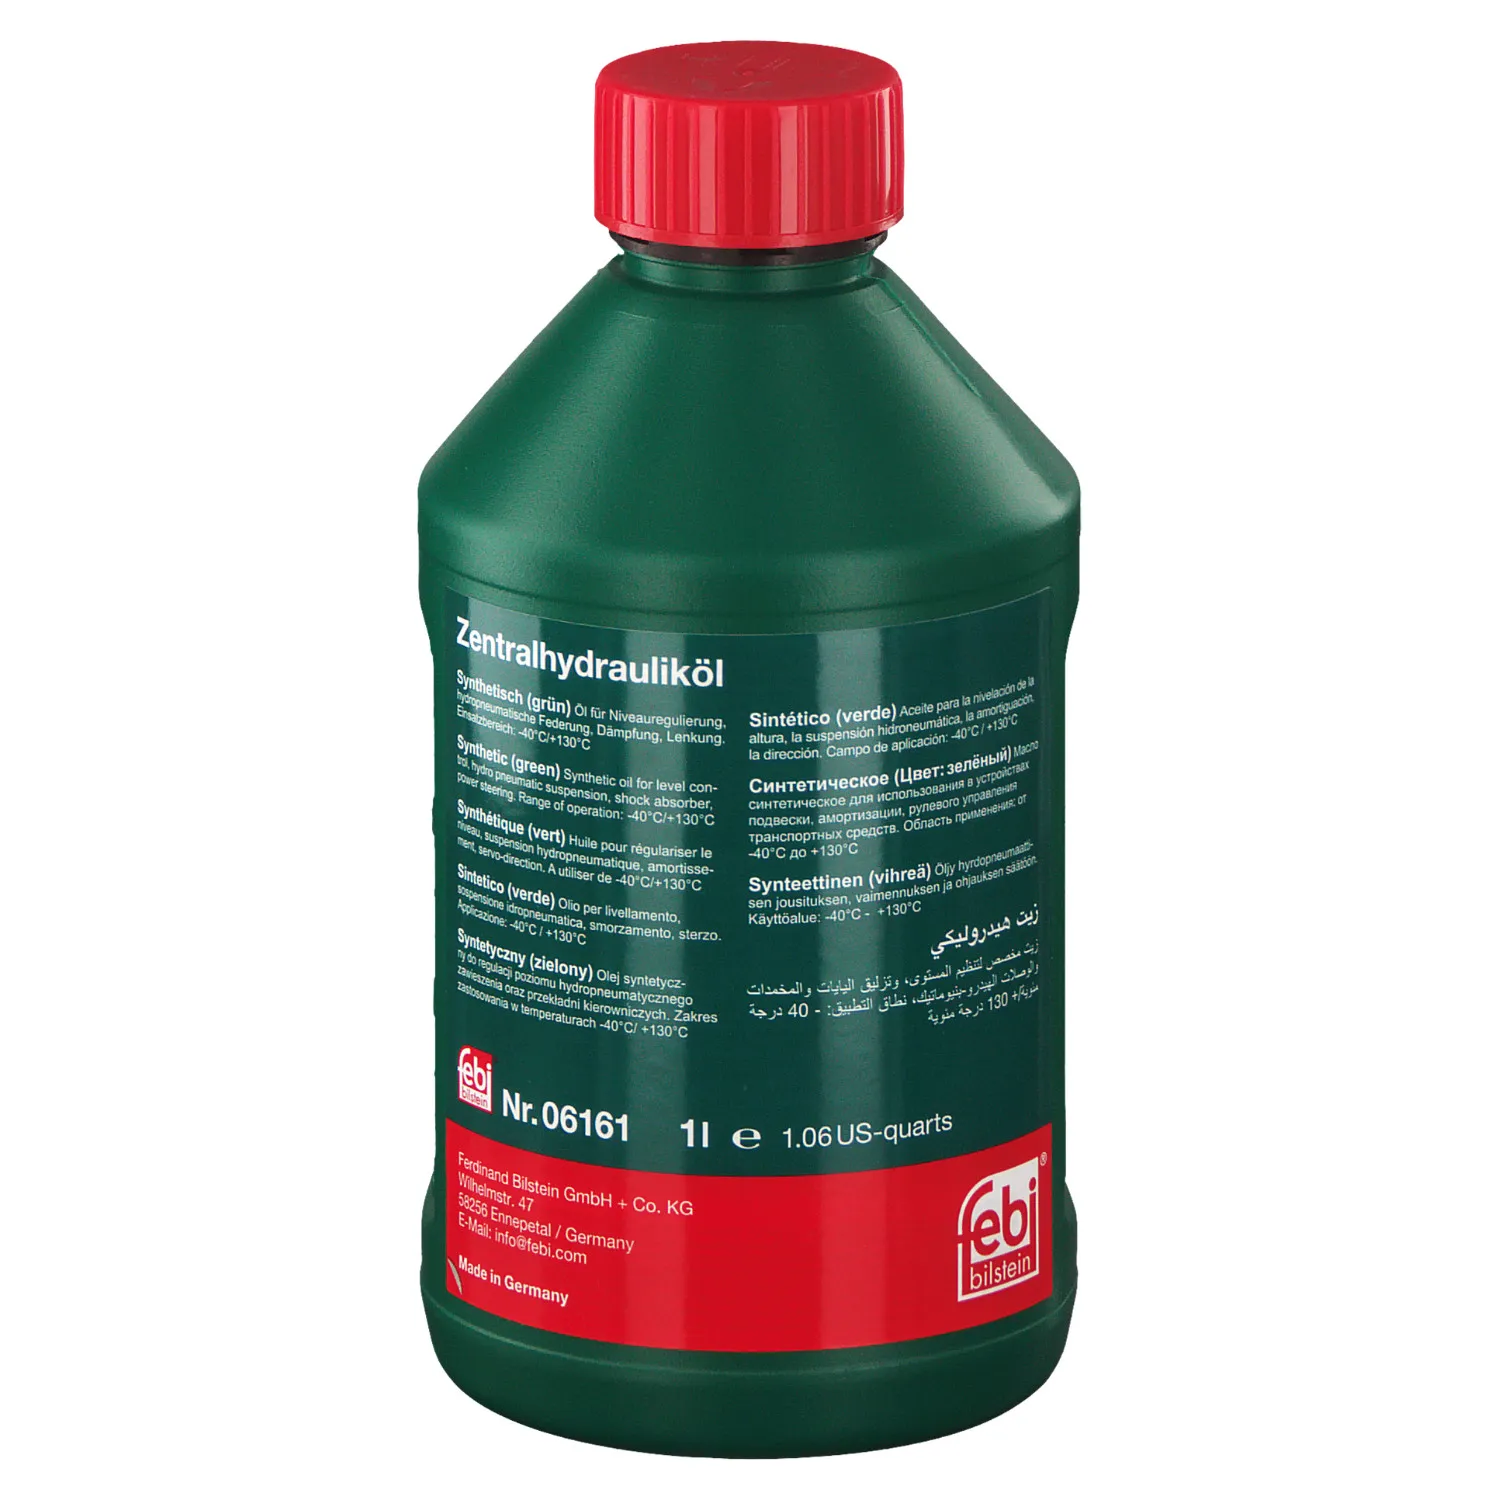 Hydrauliekolie stuurbekrachtingsolie stuurbekrachtings olie synthetisch groen 1L Febi 06161